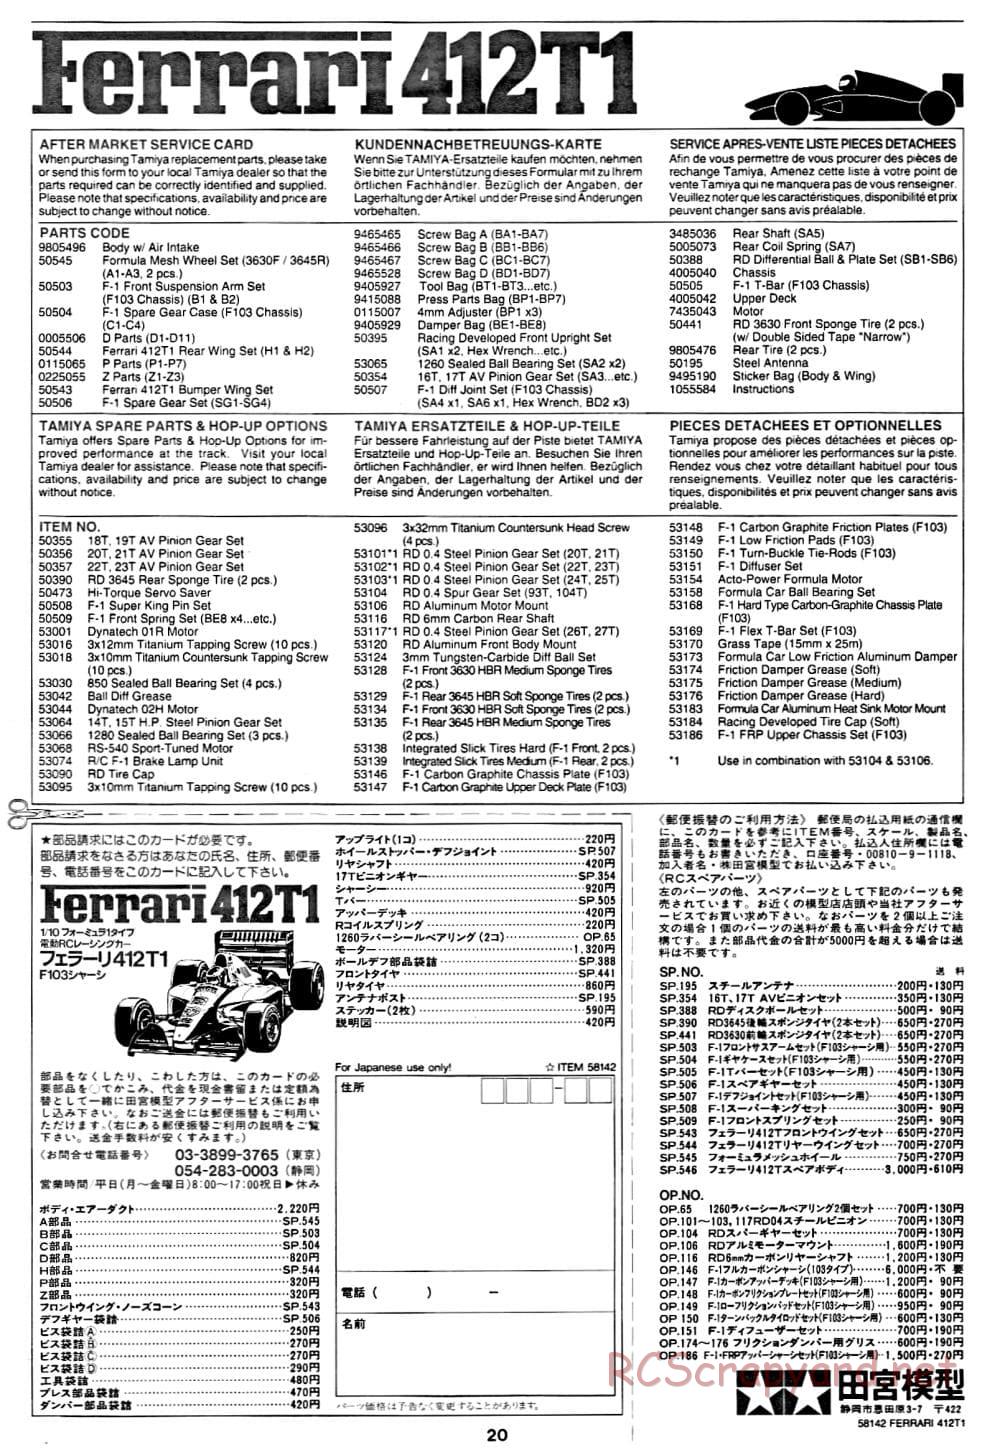 Tamiya - Ferrari 412T1 - F103 Chassis - Manual - Page 20